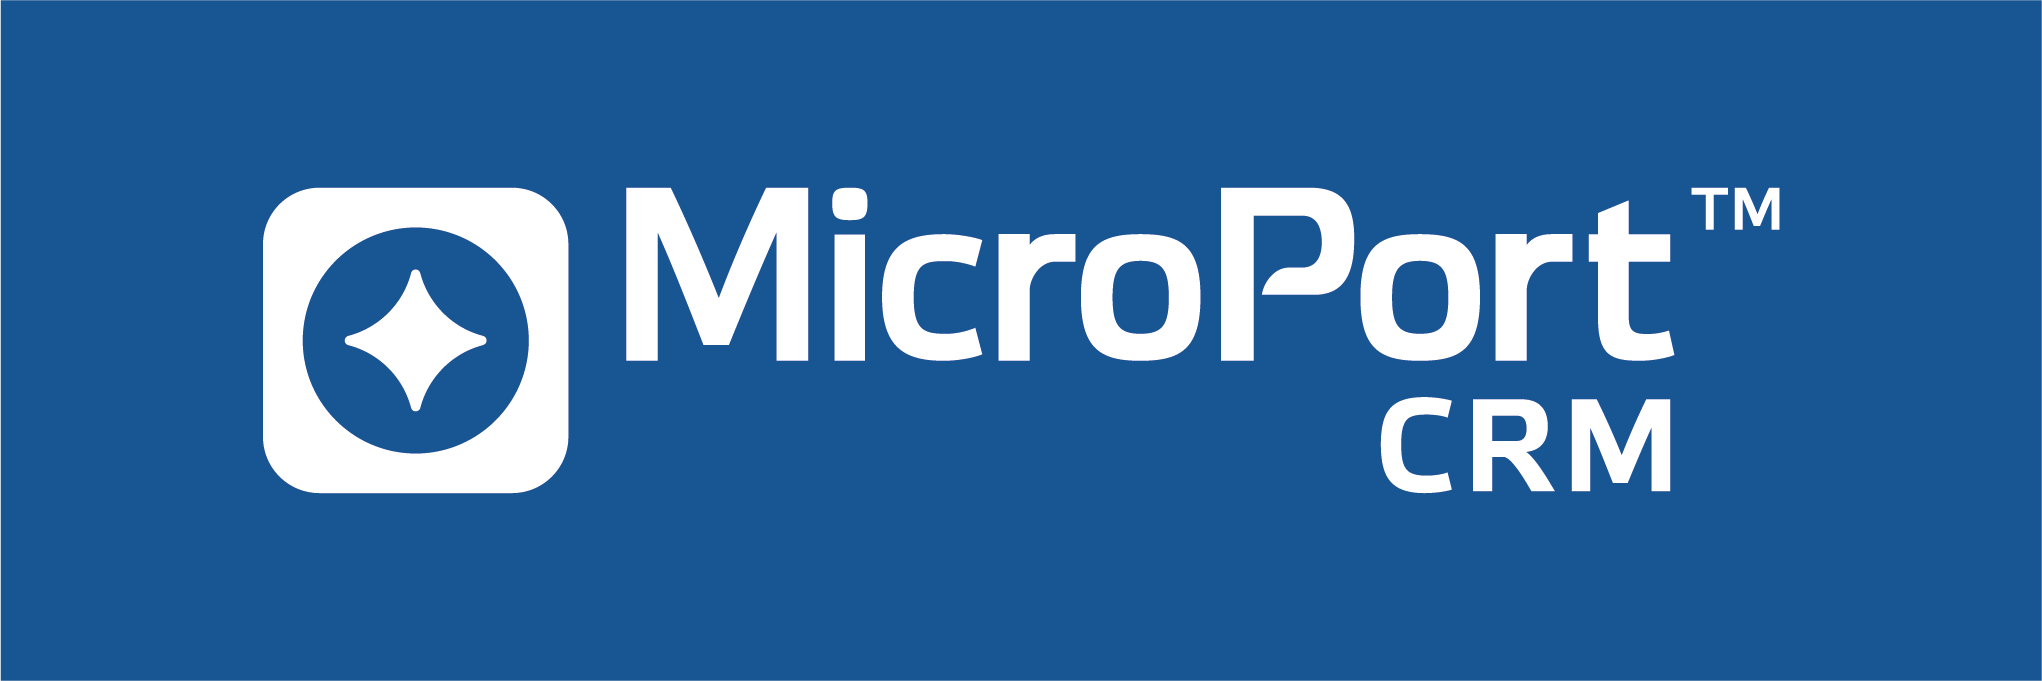 Microport%20Logo%20blu.png